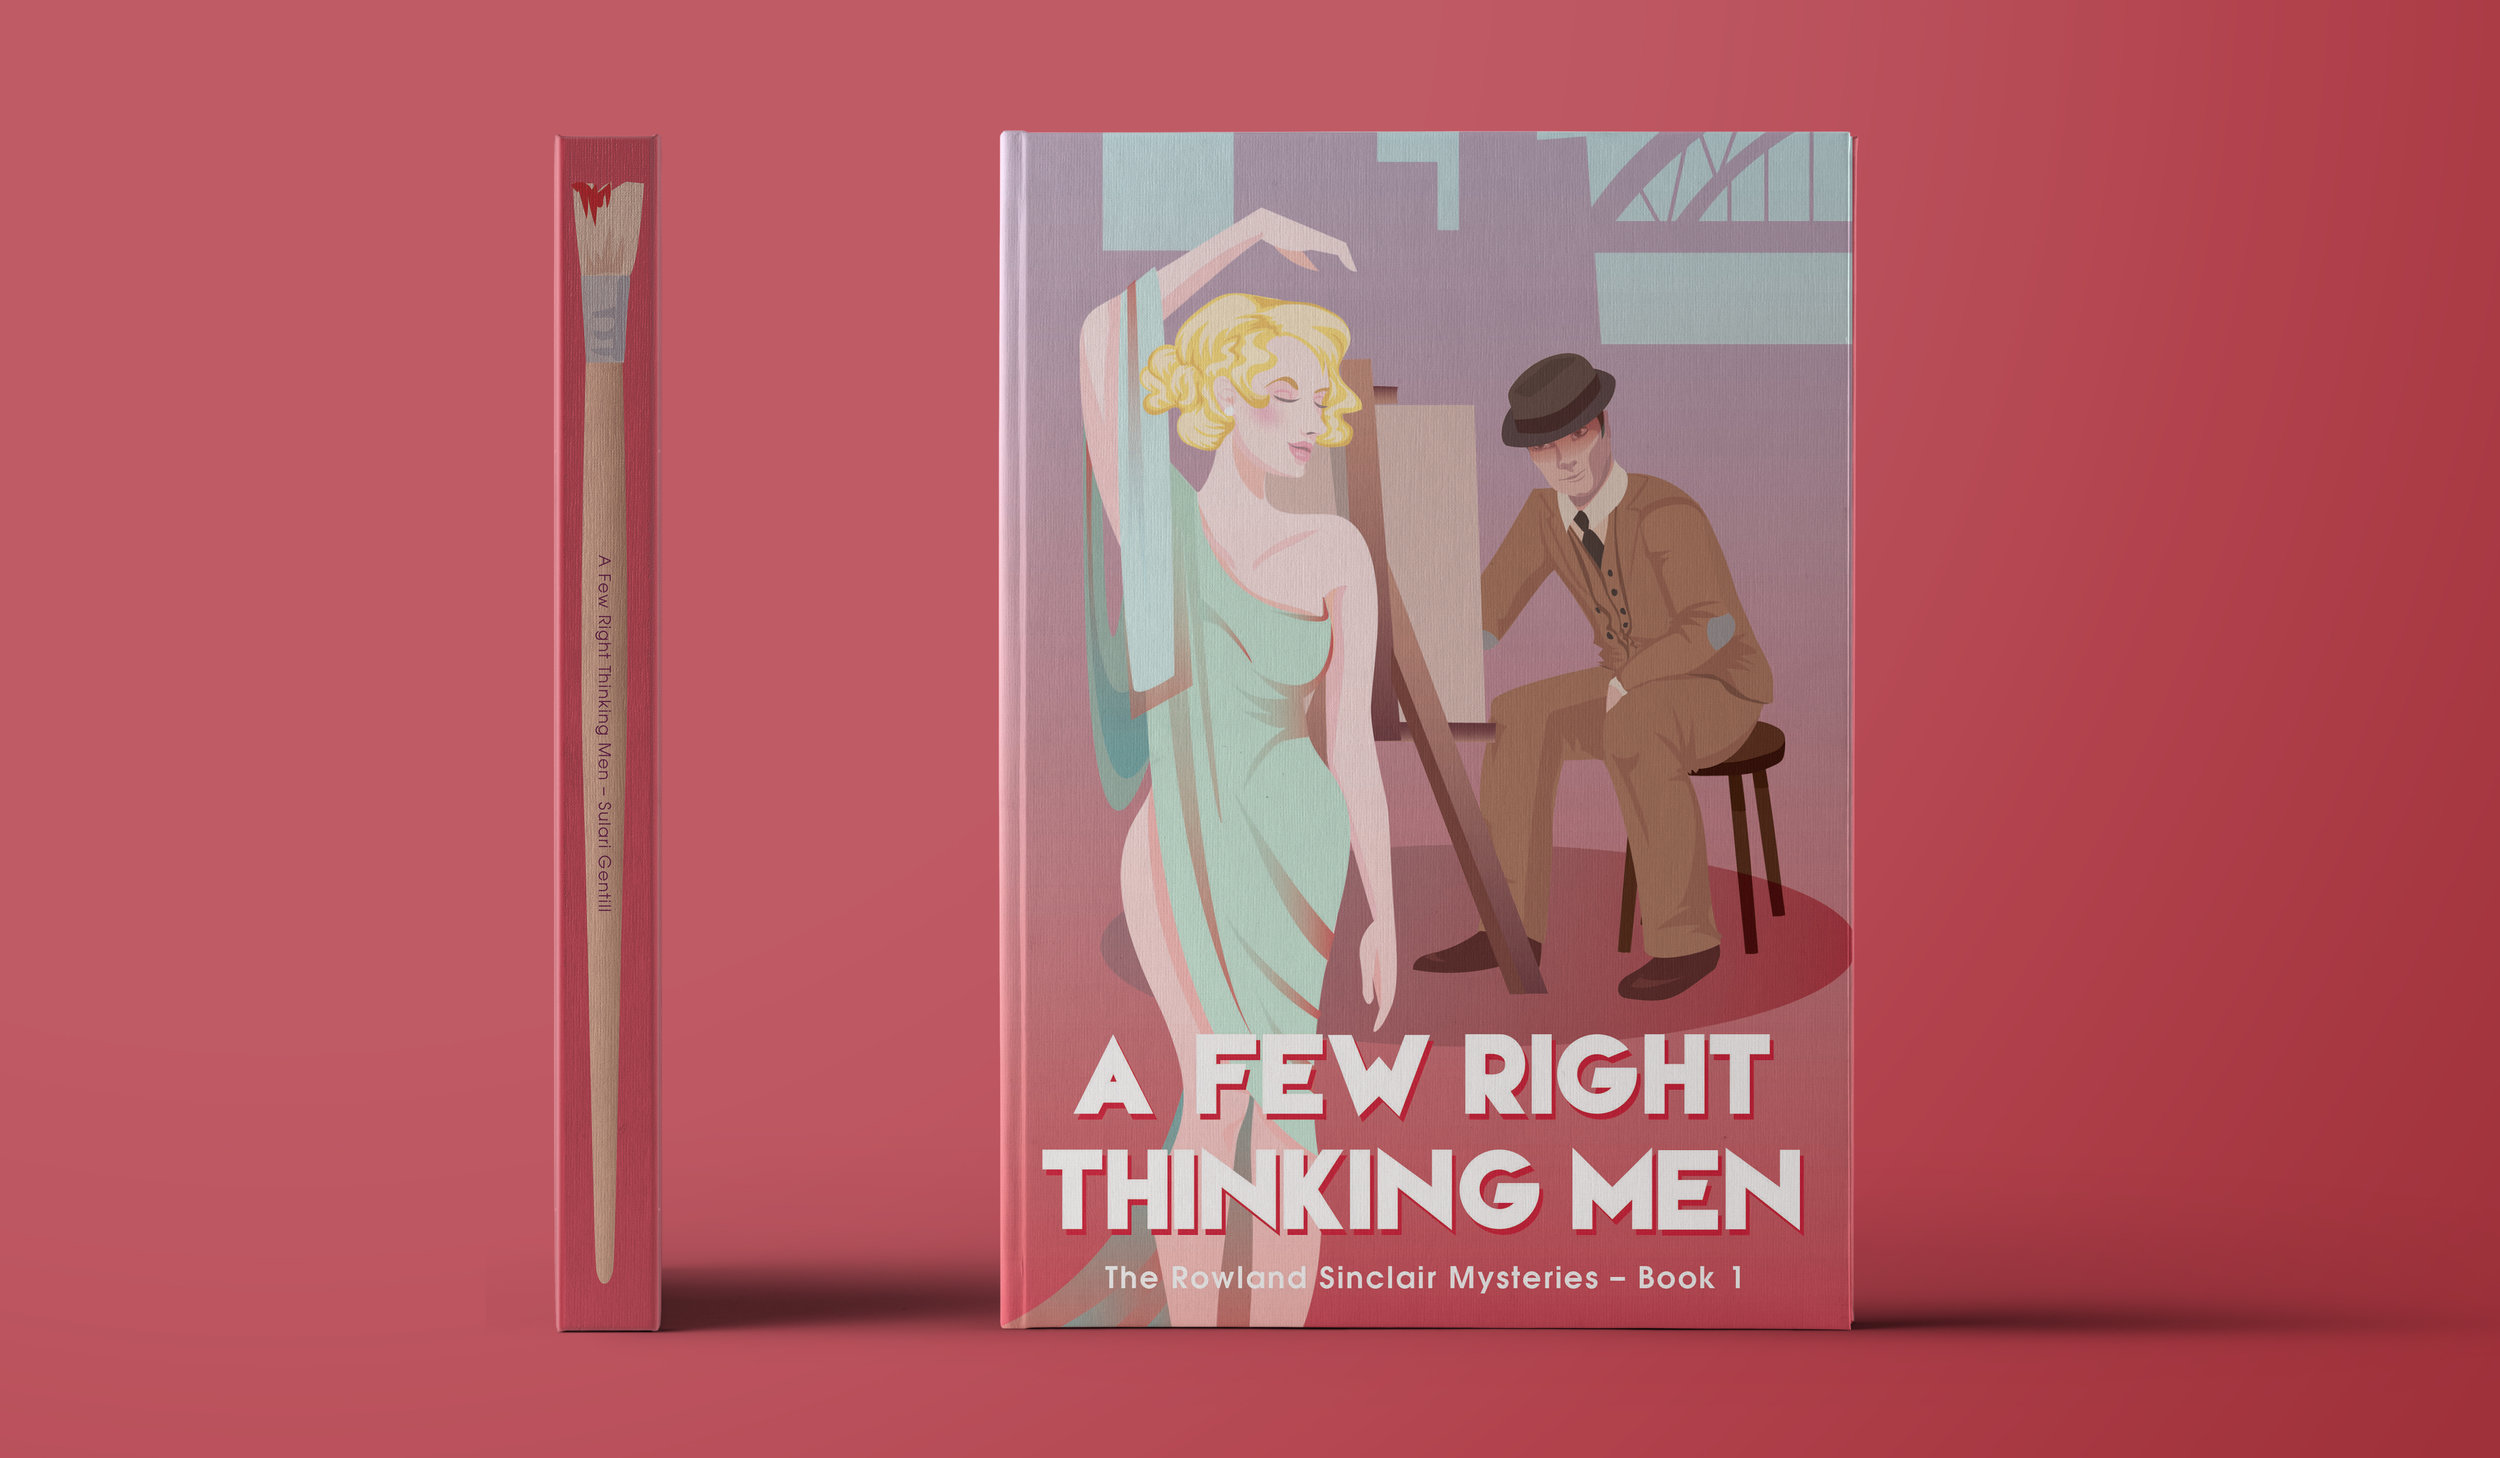 Book cover design - A few right thinking men